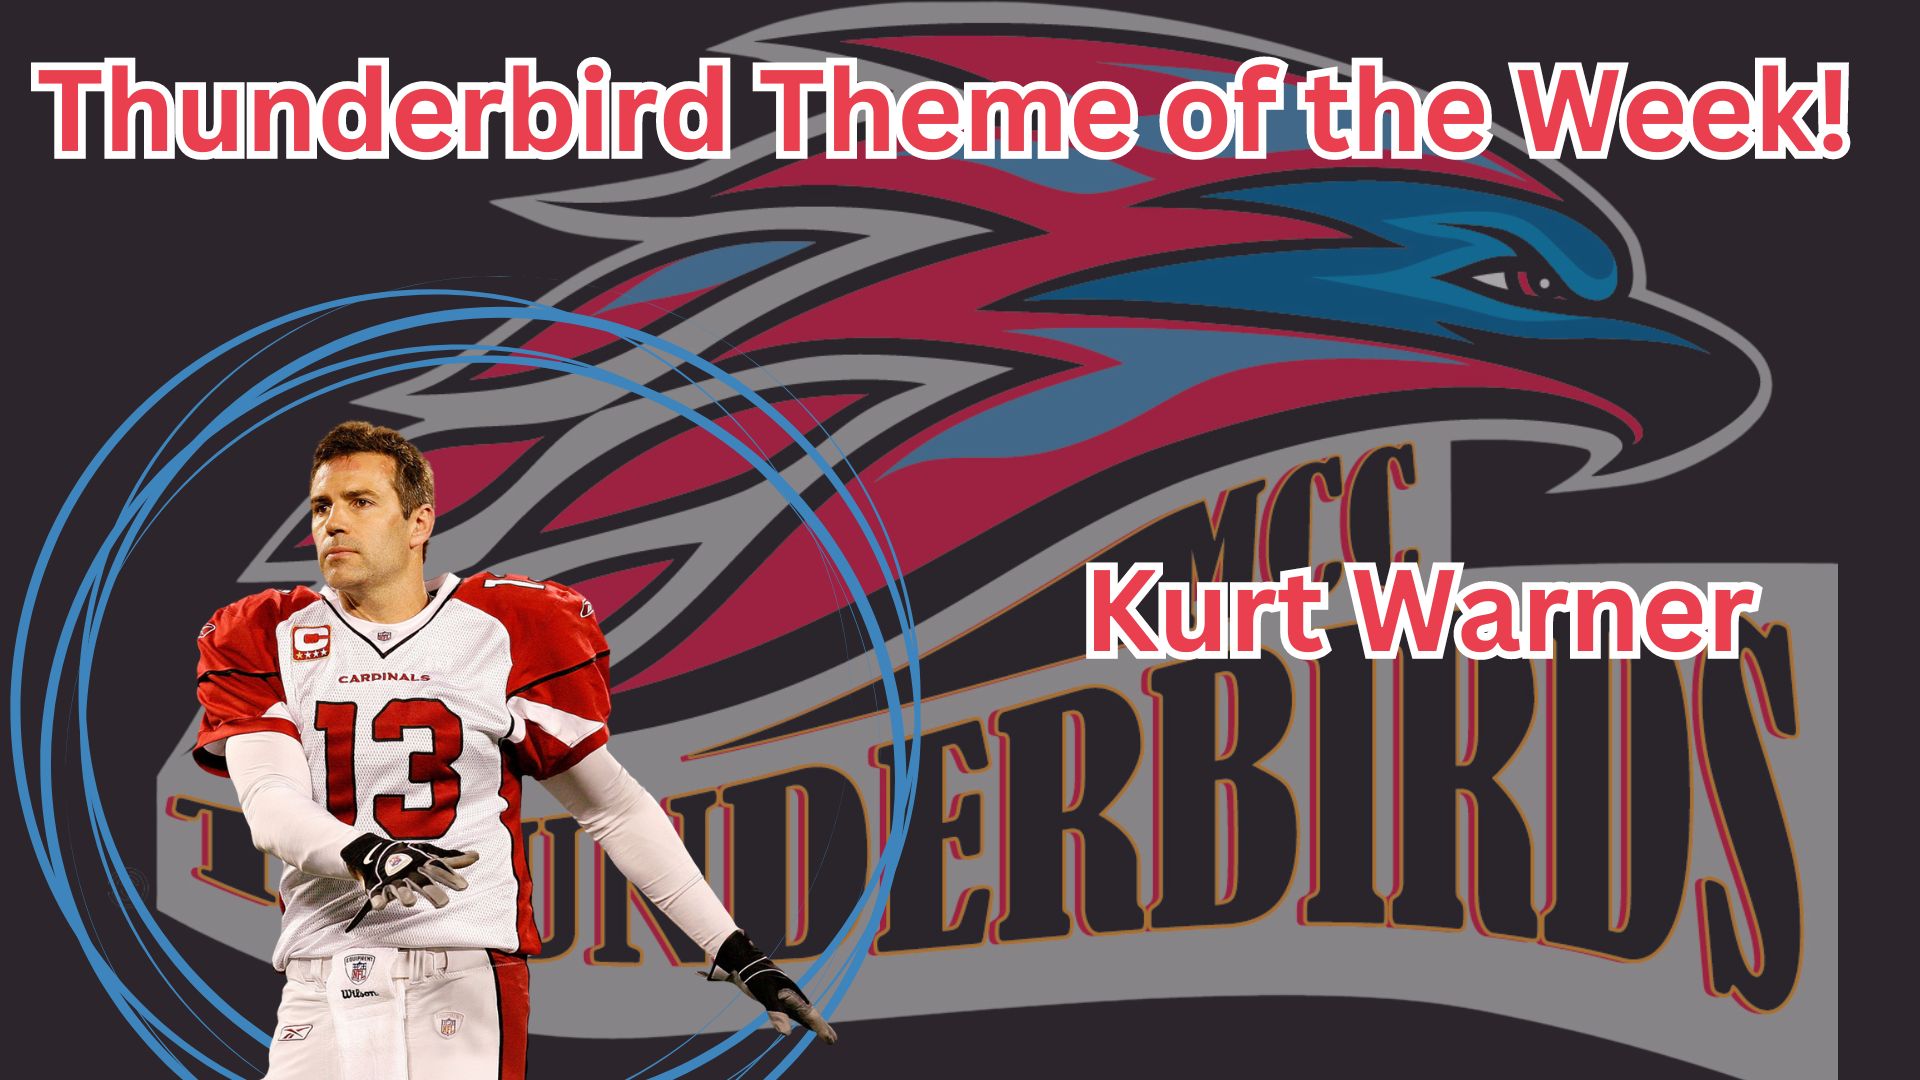 Thunderbird Theme of the Week...Featuring Kurt Warner